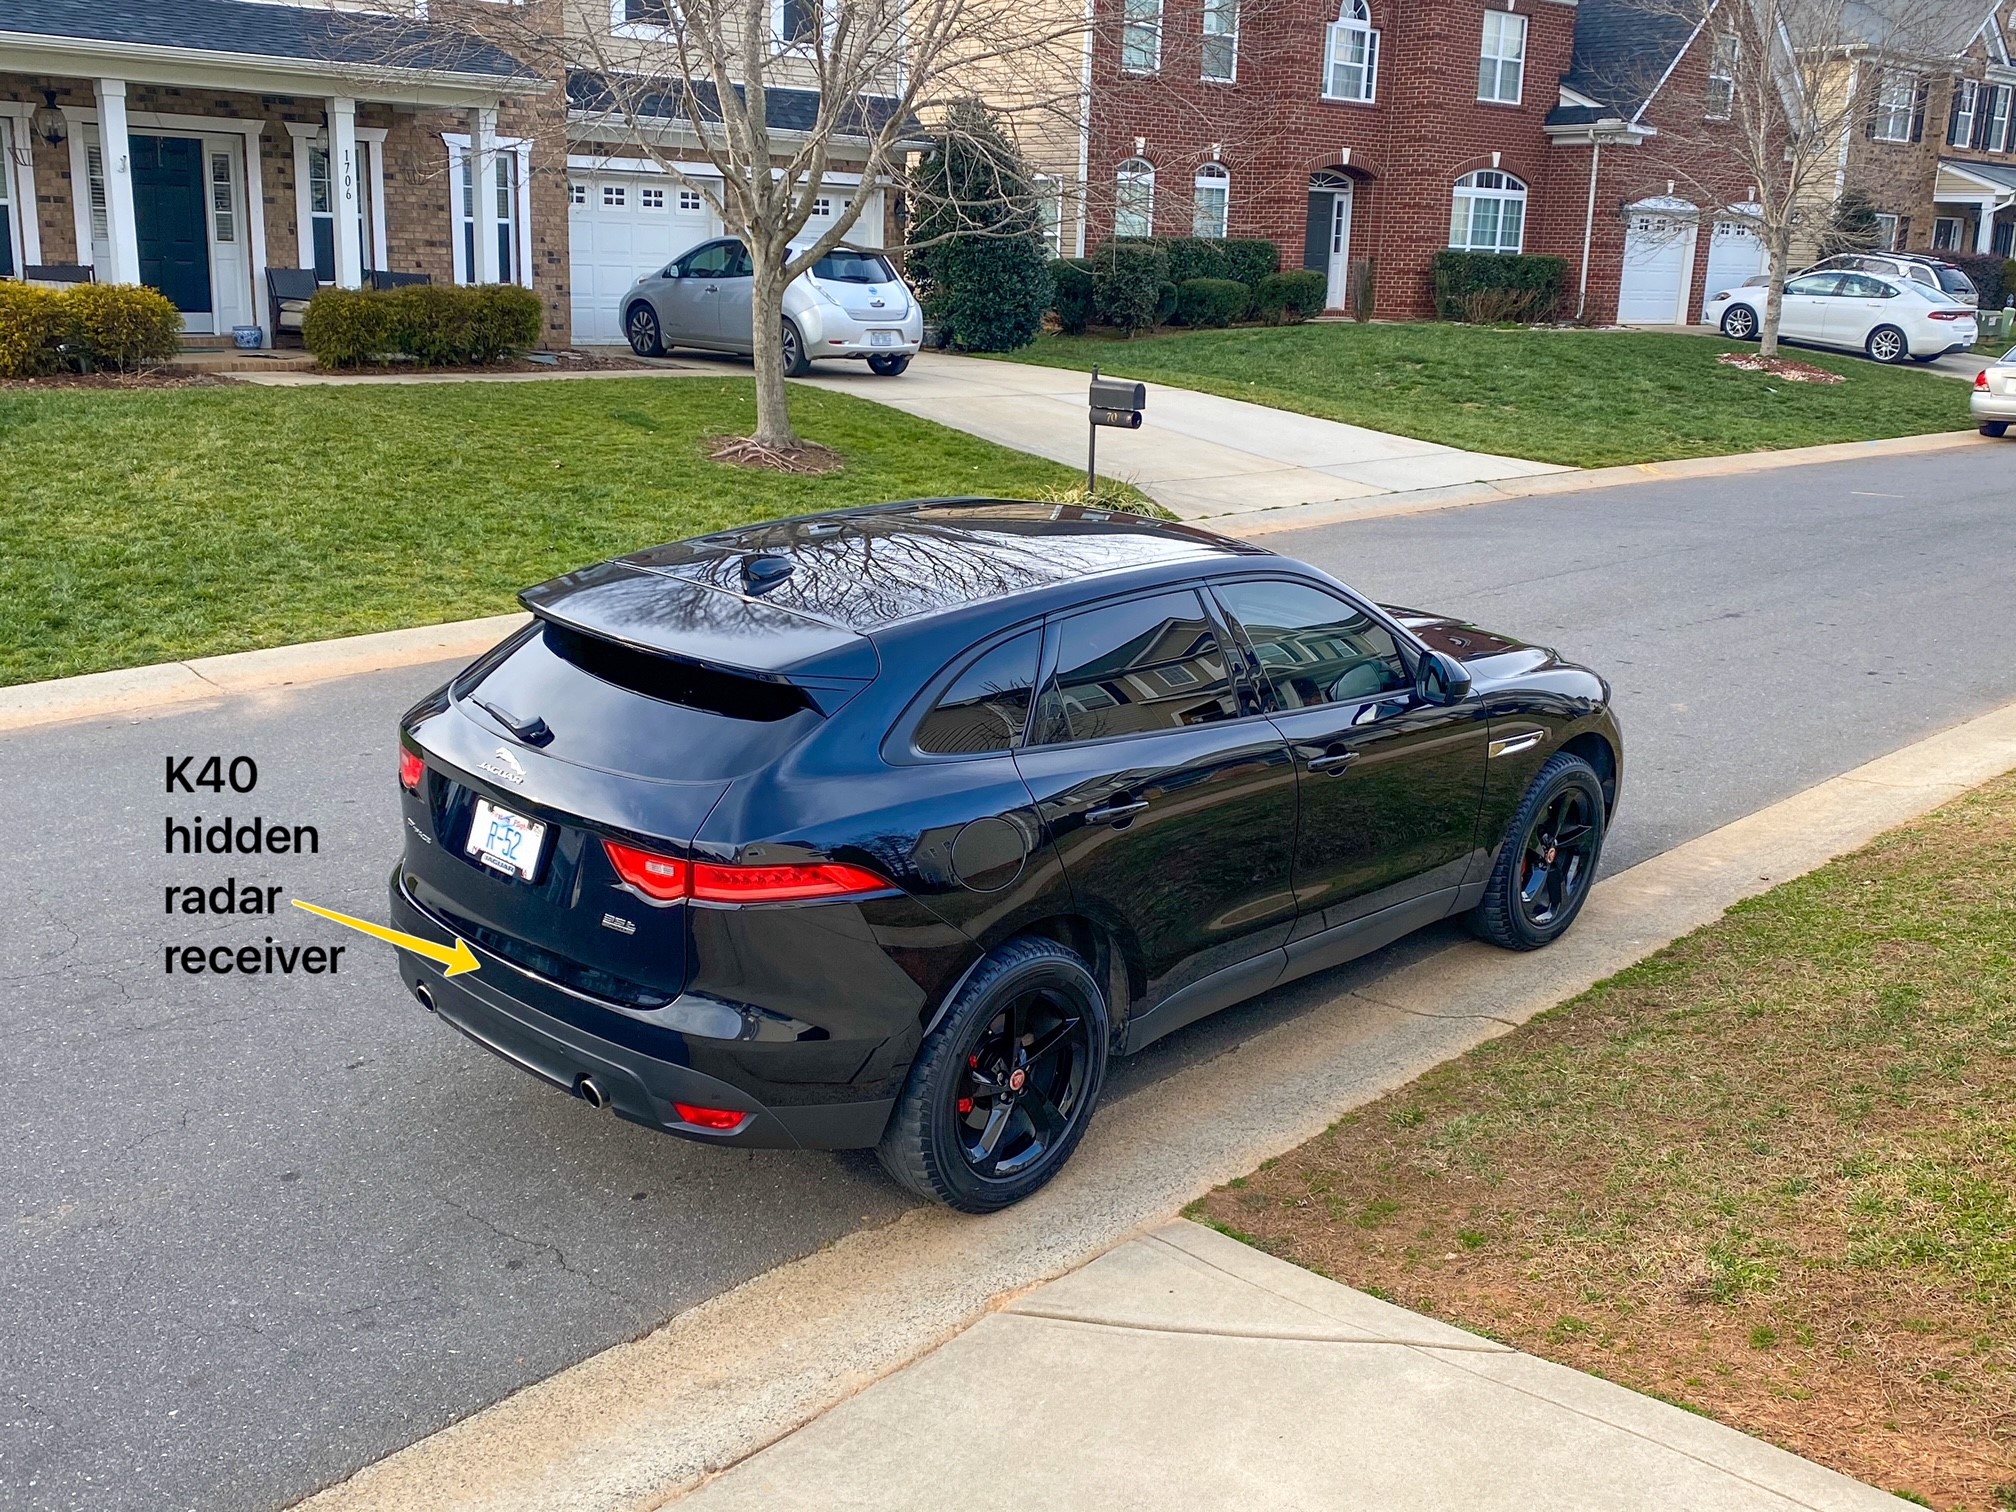 2019 Jaguar f pace in charlotte north carolina